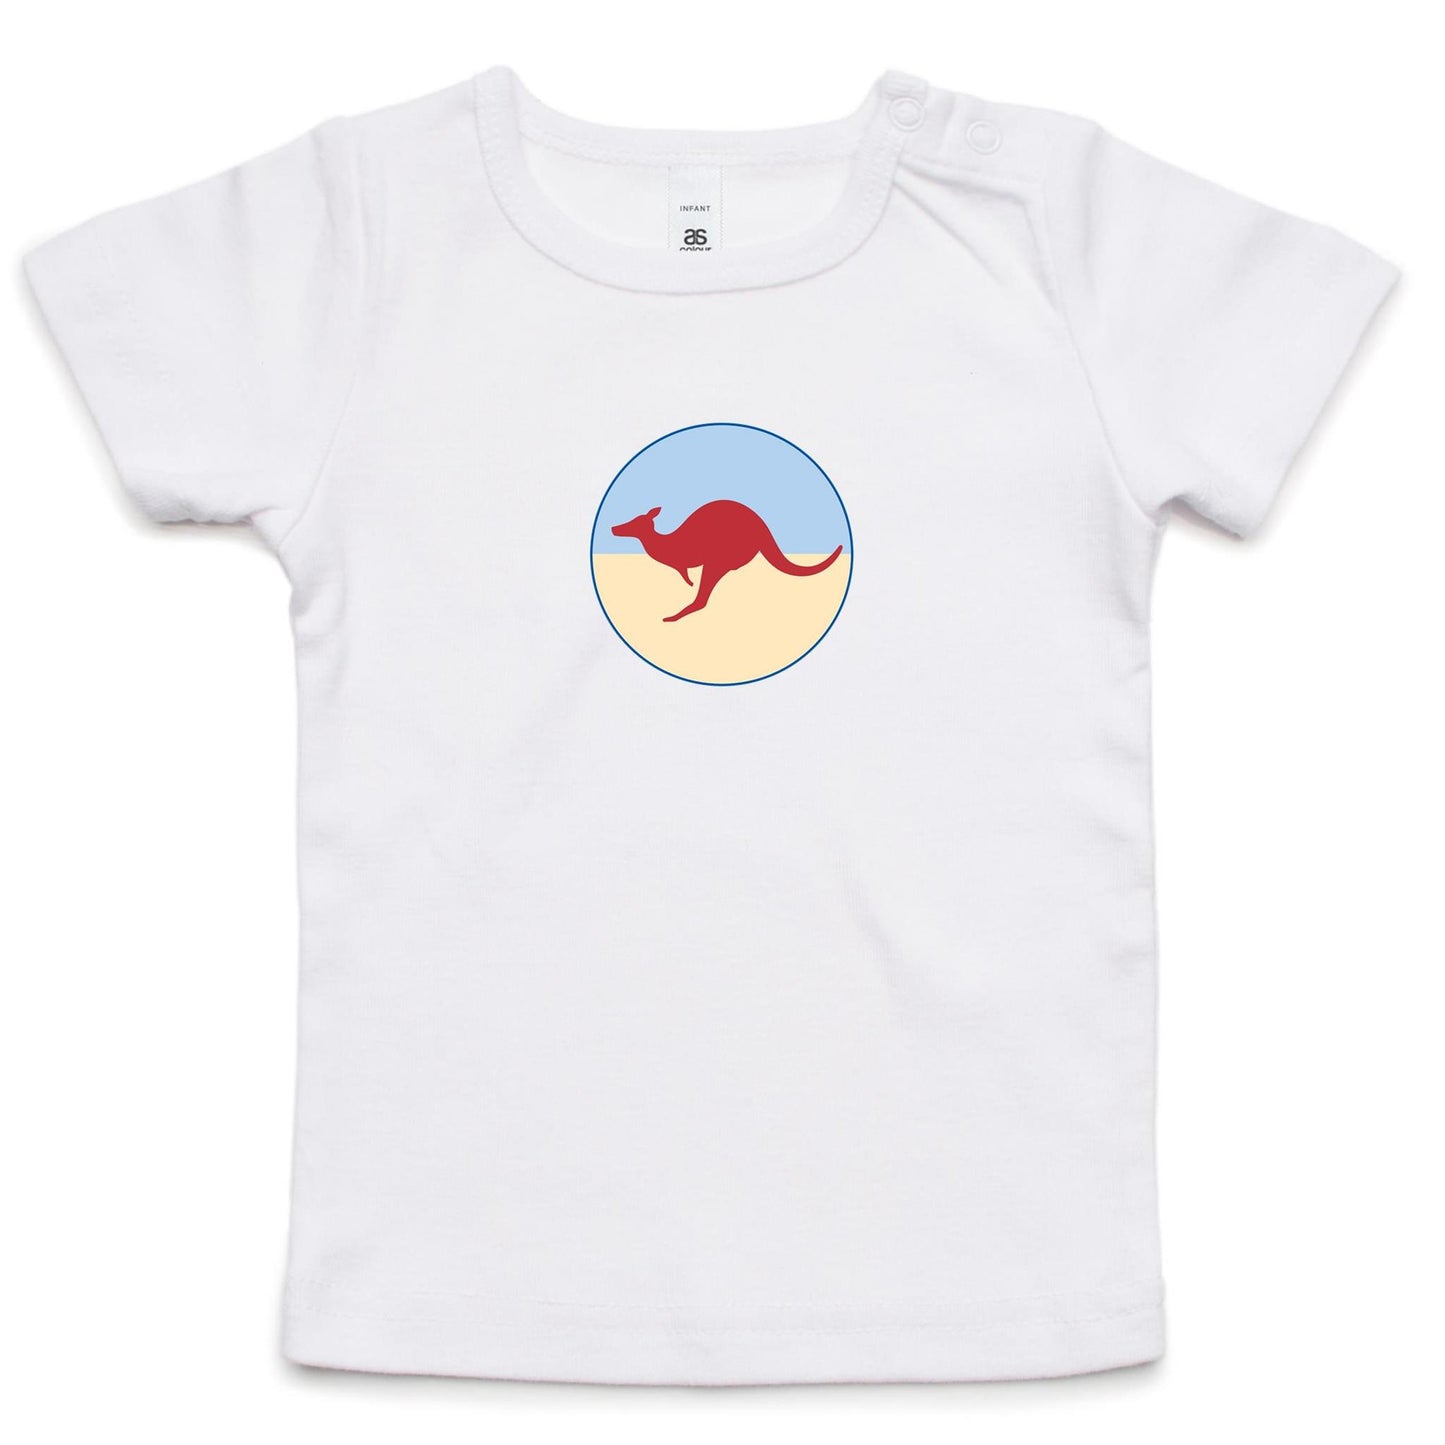 Kangaroo T Shirts for Babies